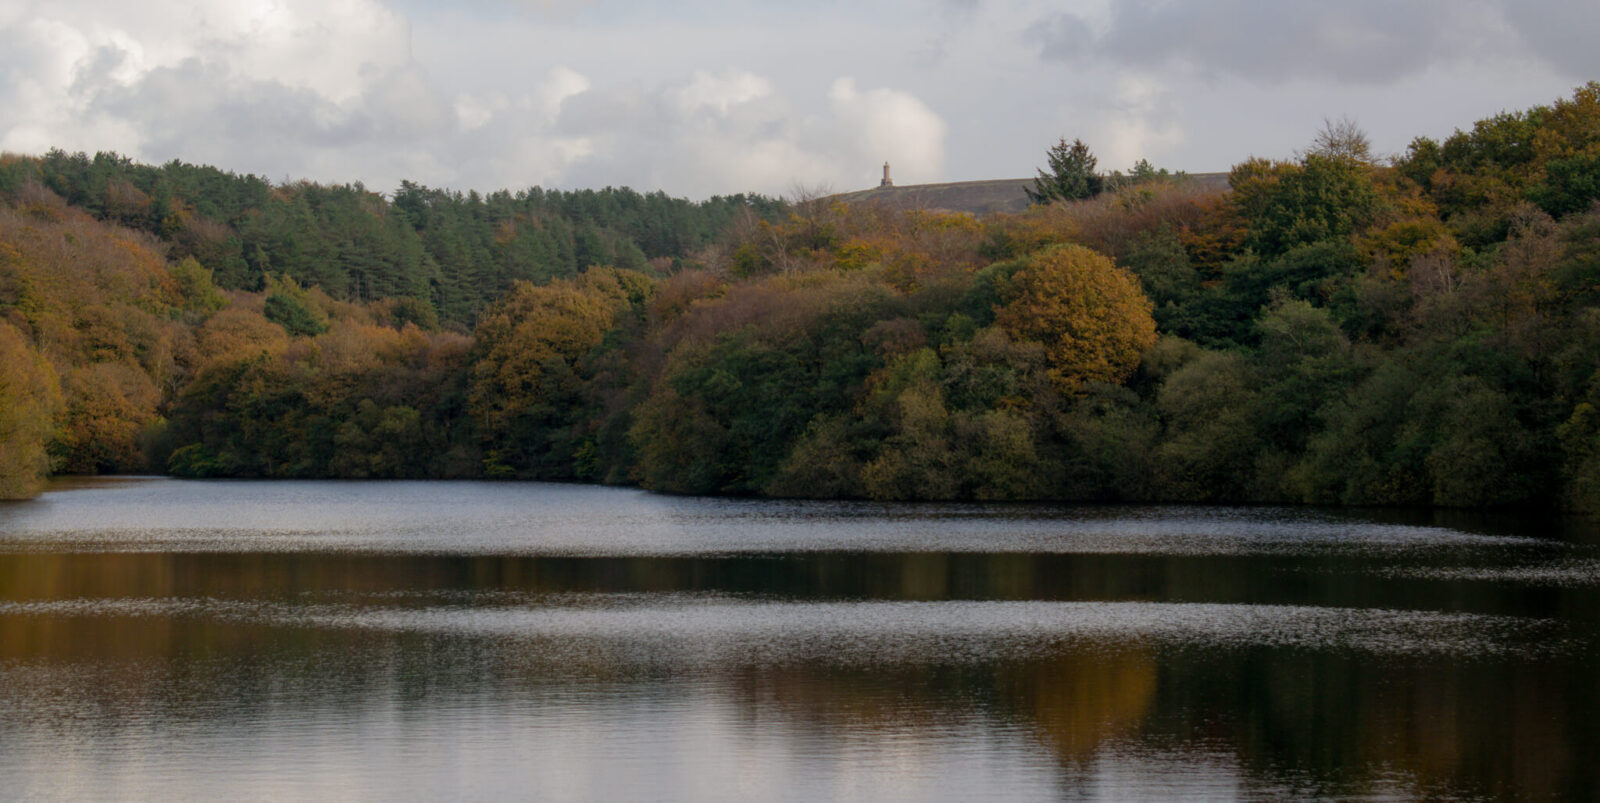 roddlesworth reservoirs walk in lancashire. abbey village. family walks lancashire